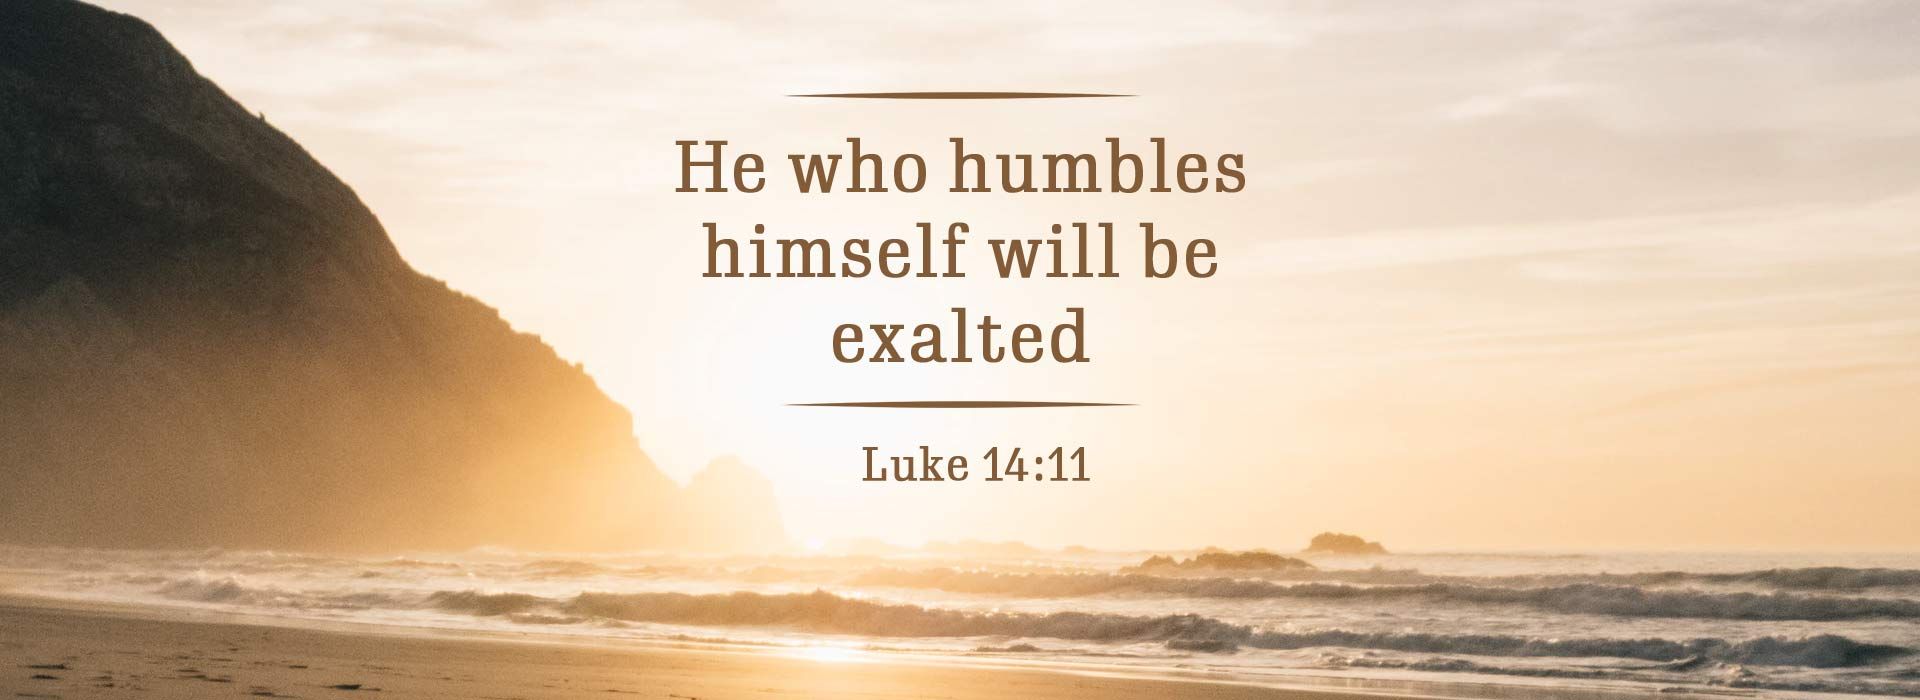 He who humbles himself